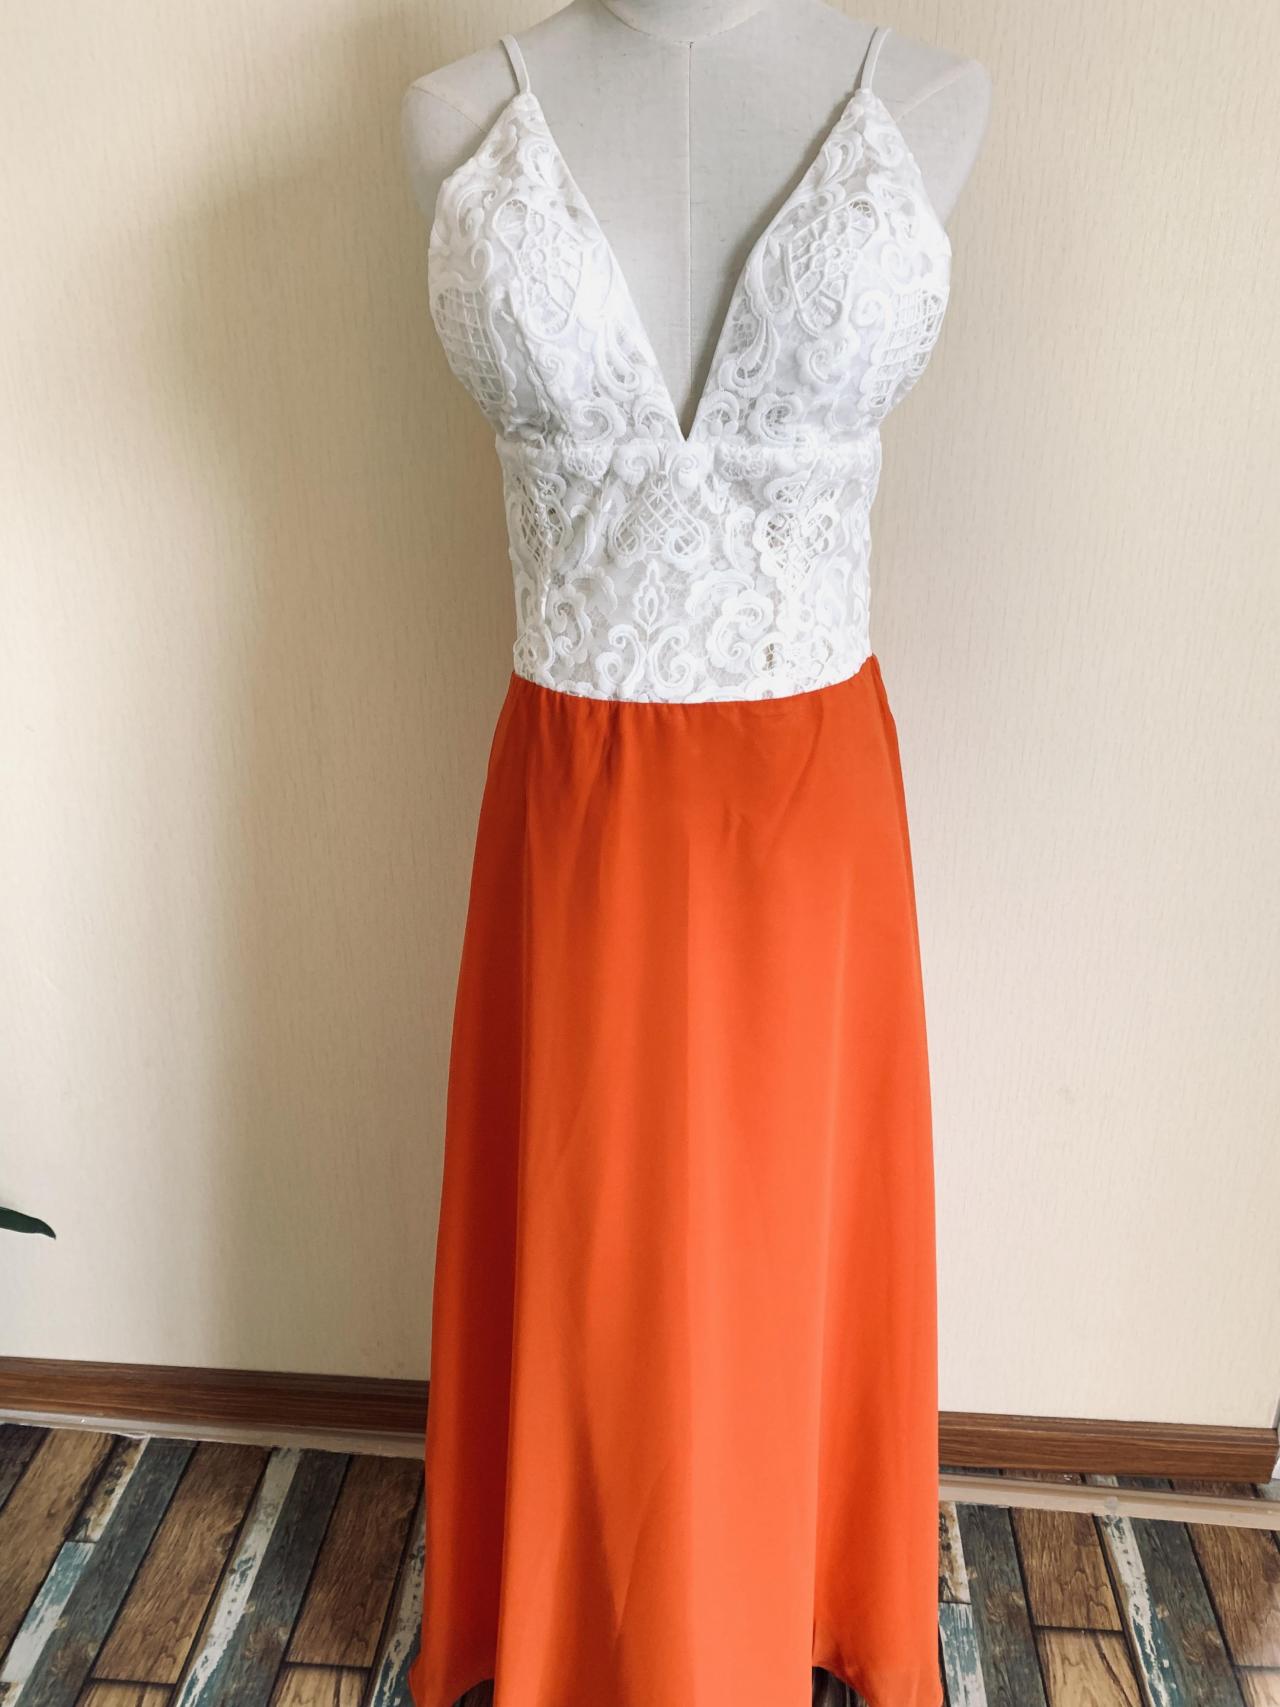 Spaghetti Straps Prom Dress,orange Party Dress,maxi Dress With Lace ,charming ,sexy,